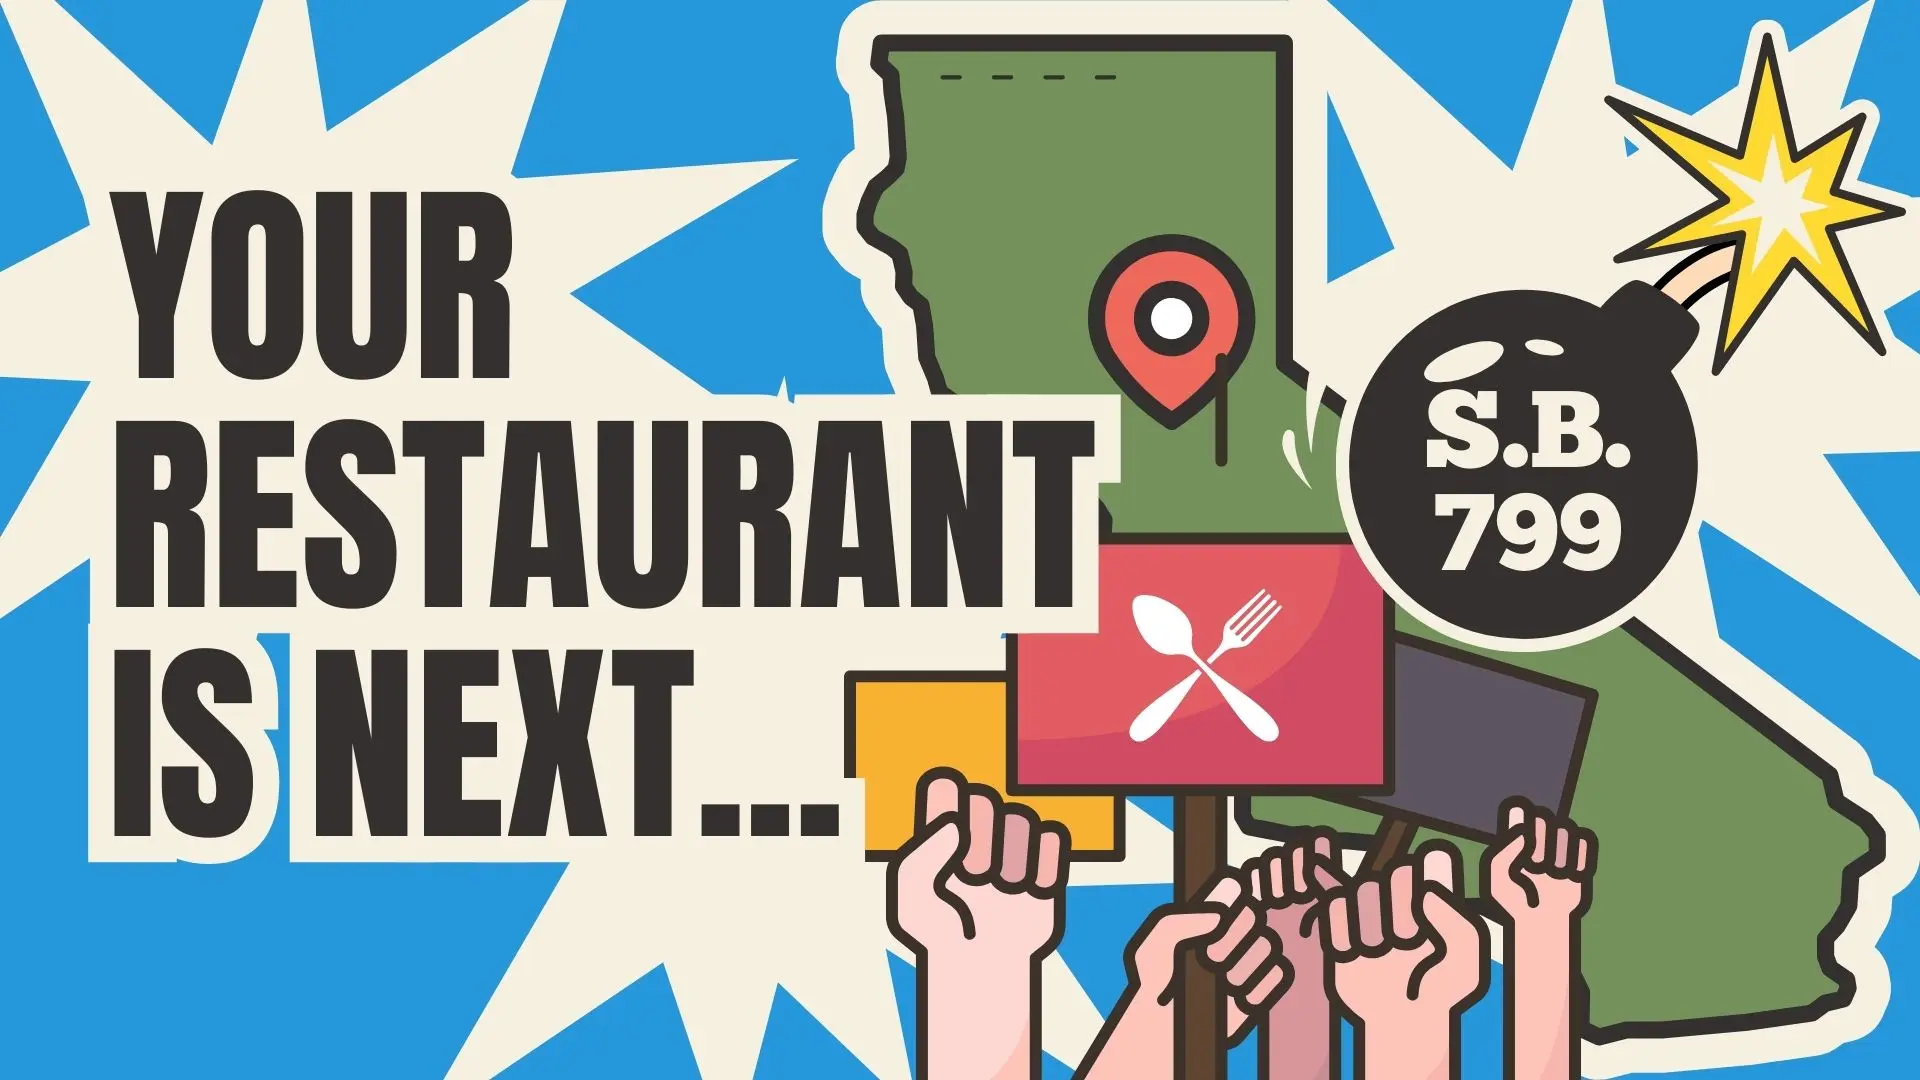 How Senate Bill 799 Could Hurt Your Restaurant